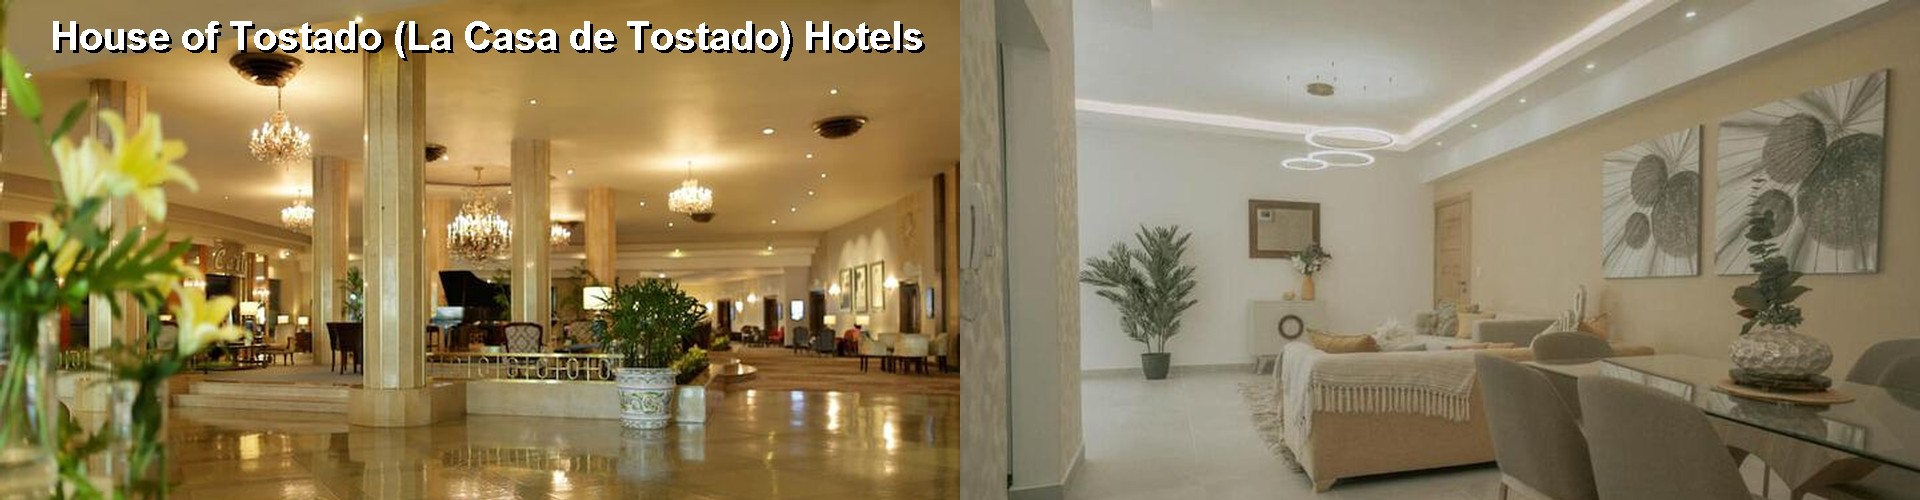 5 Best Hotels near House of Tostado (La Casa de Tostado)